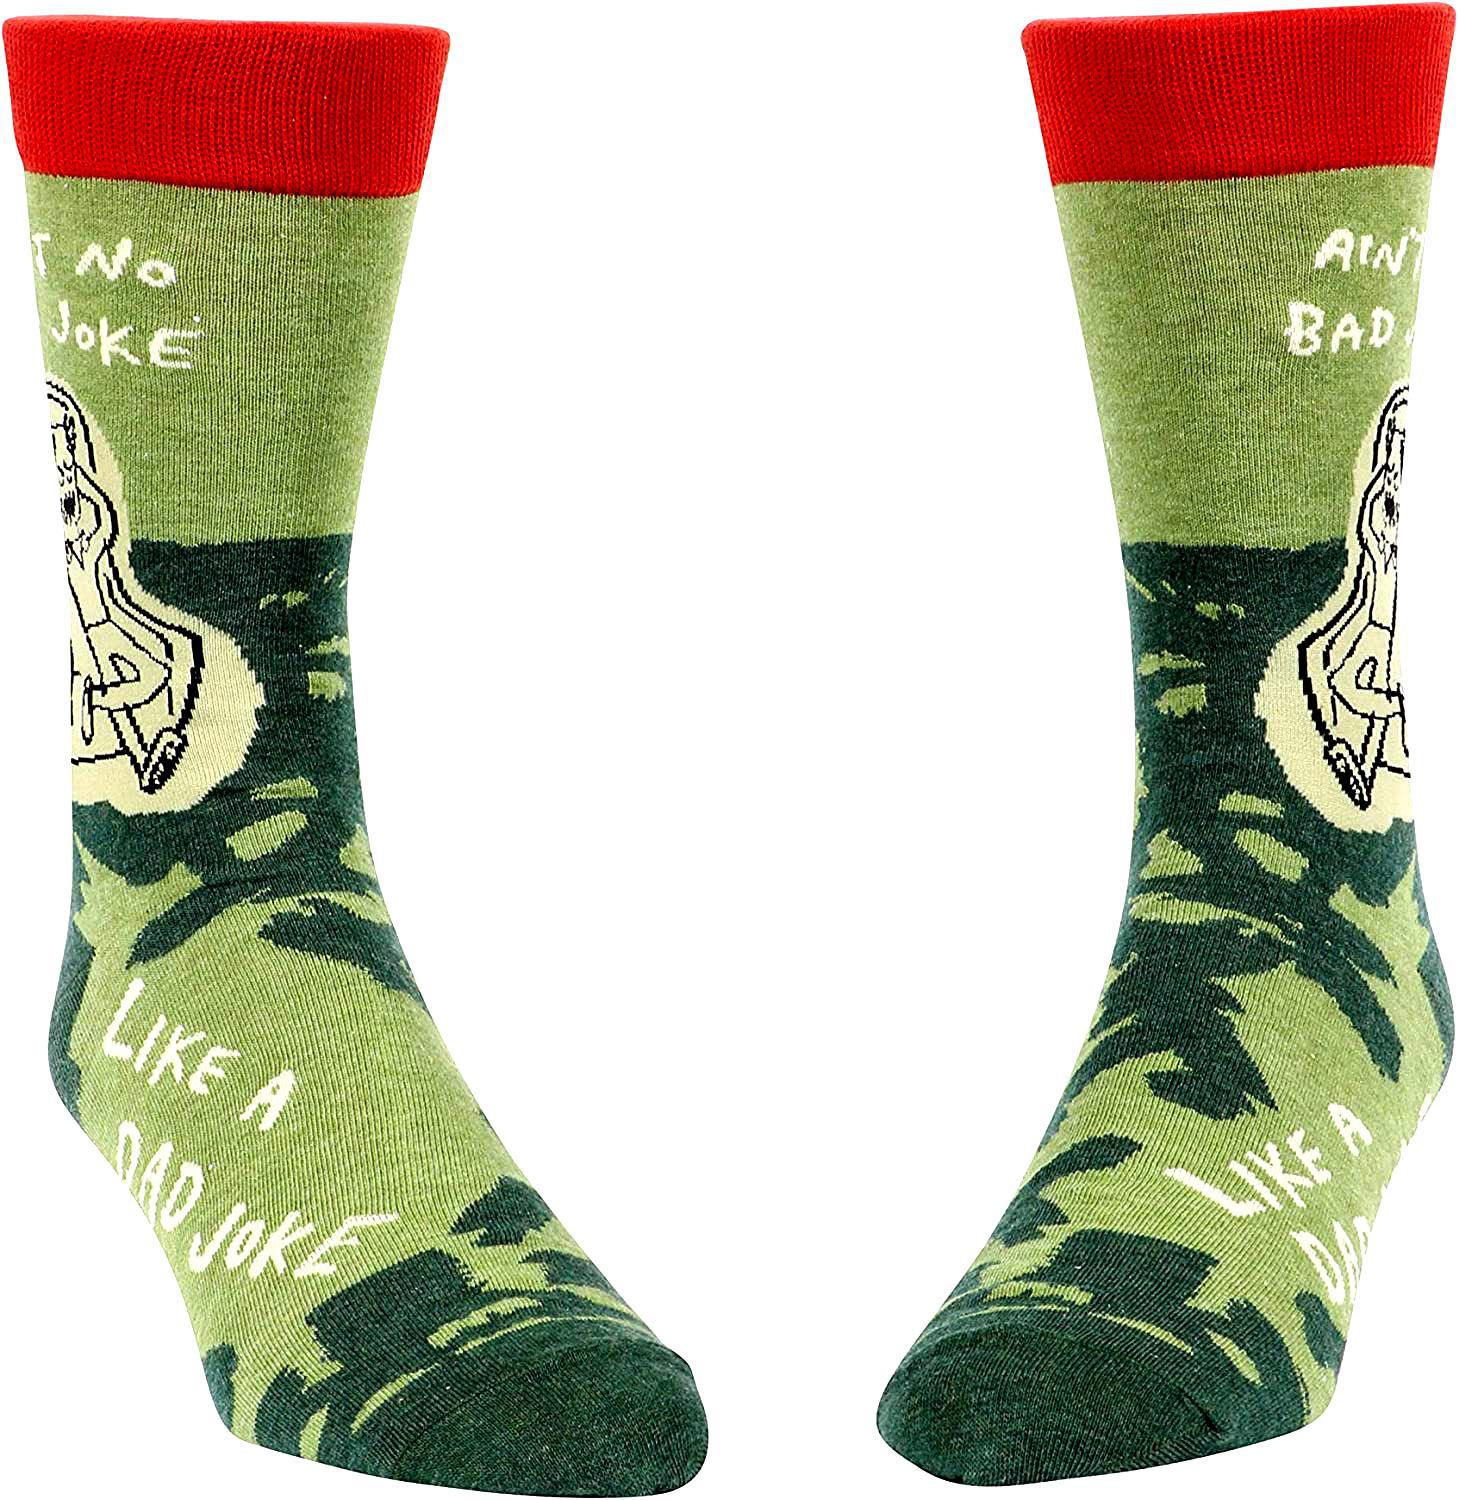 "Dad Joke" Men's Socks